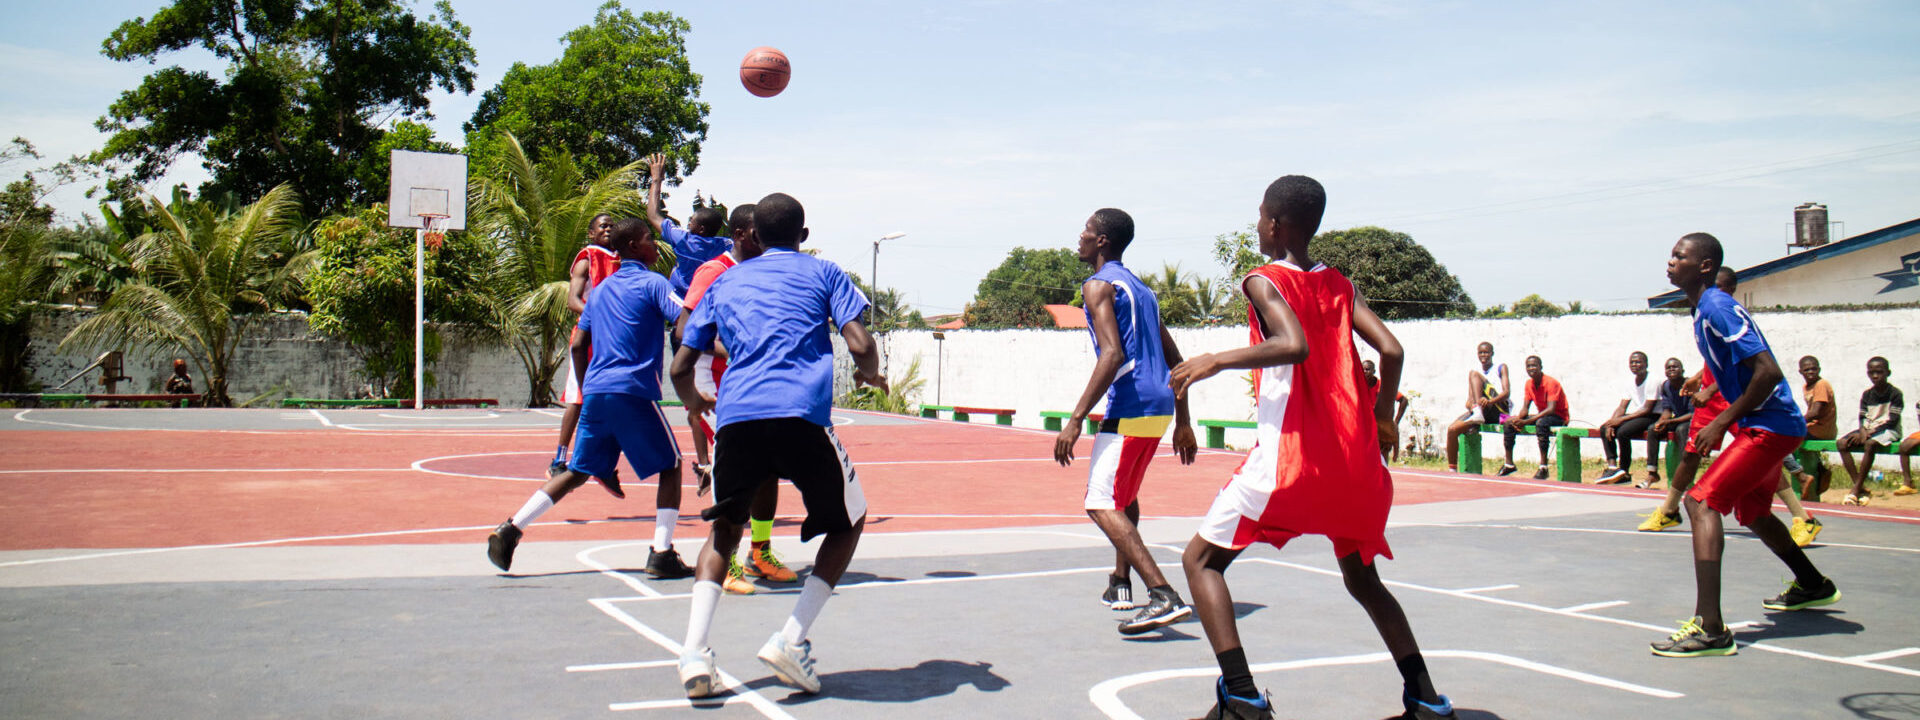 Sportplatz an der Schule von Diana E. Davies in Liberia